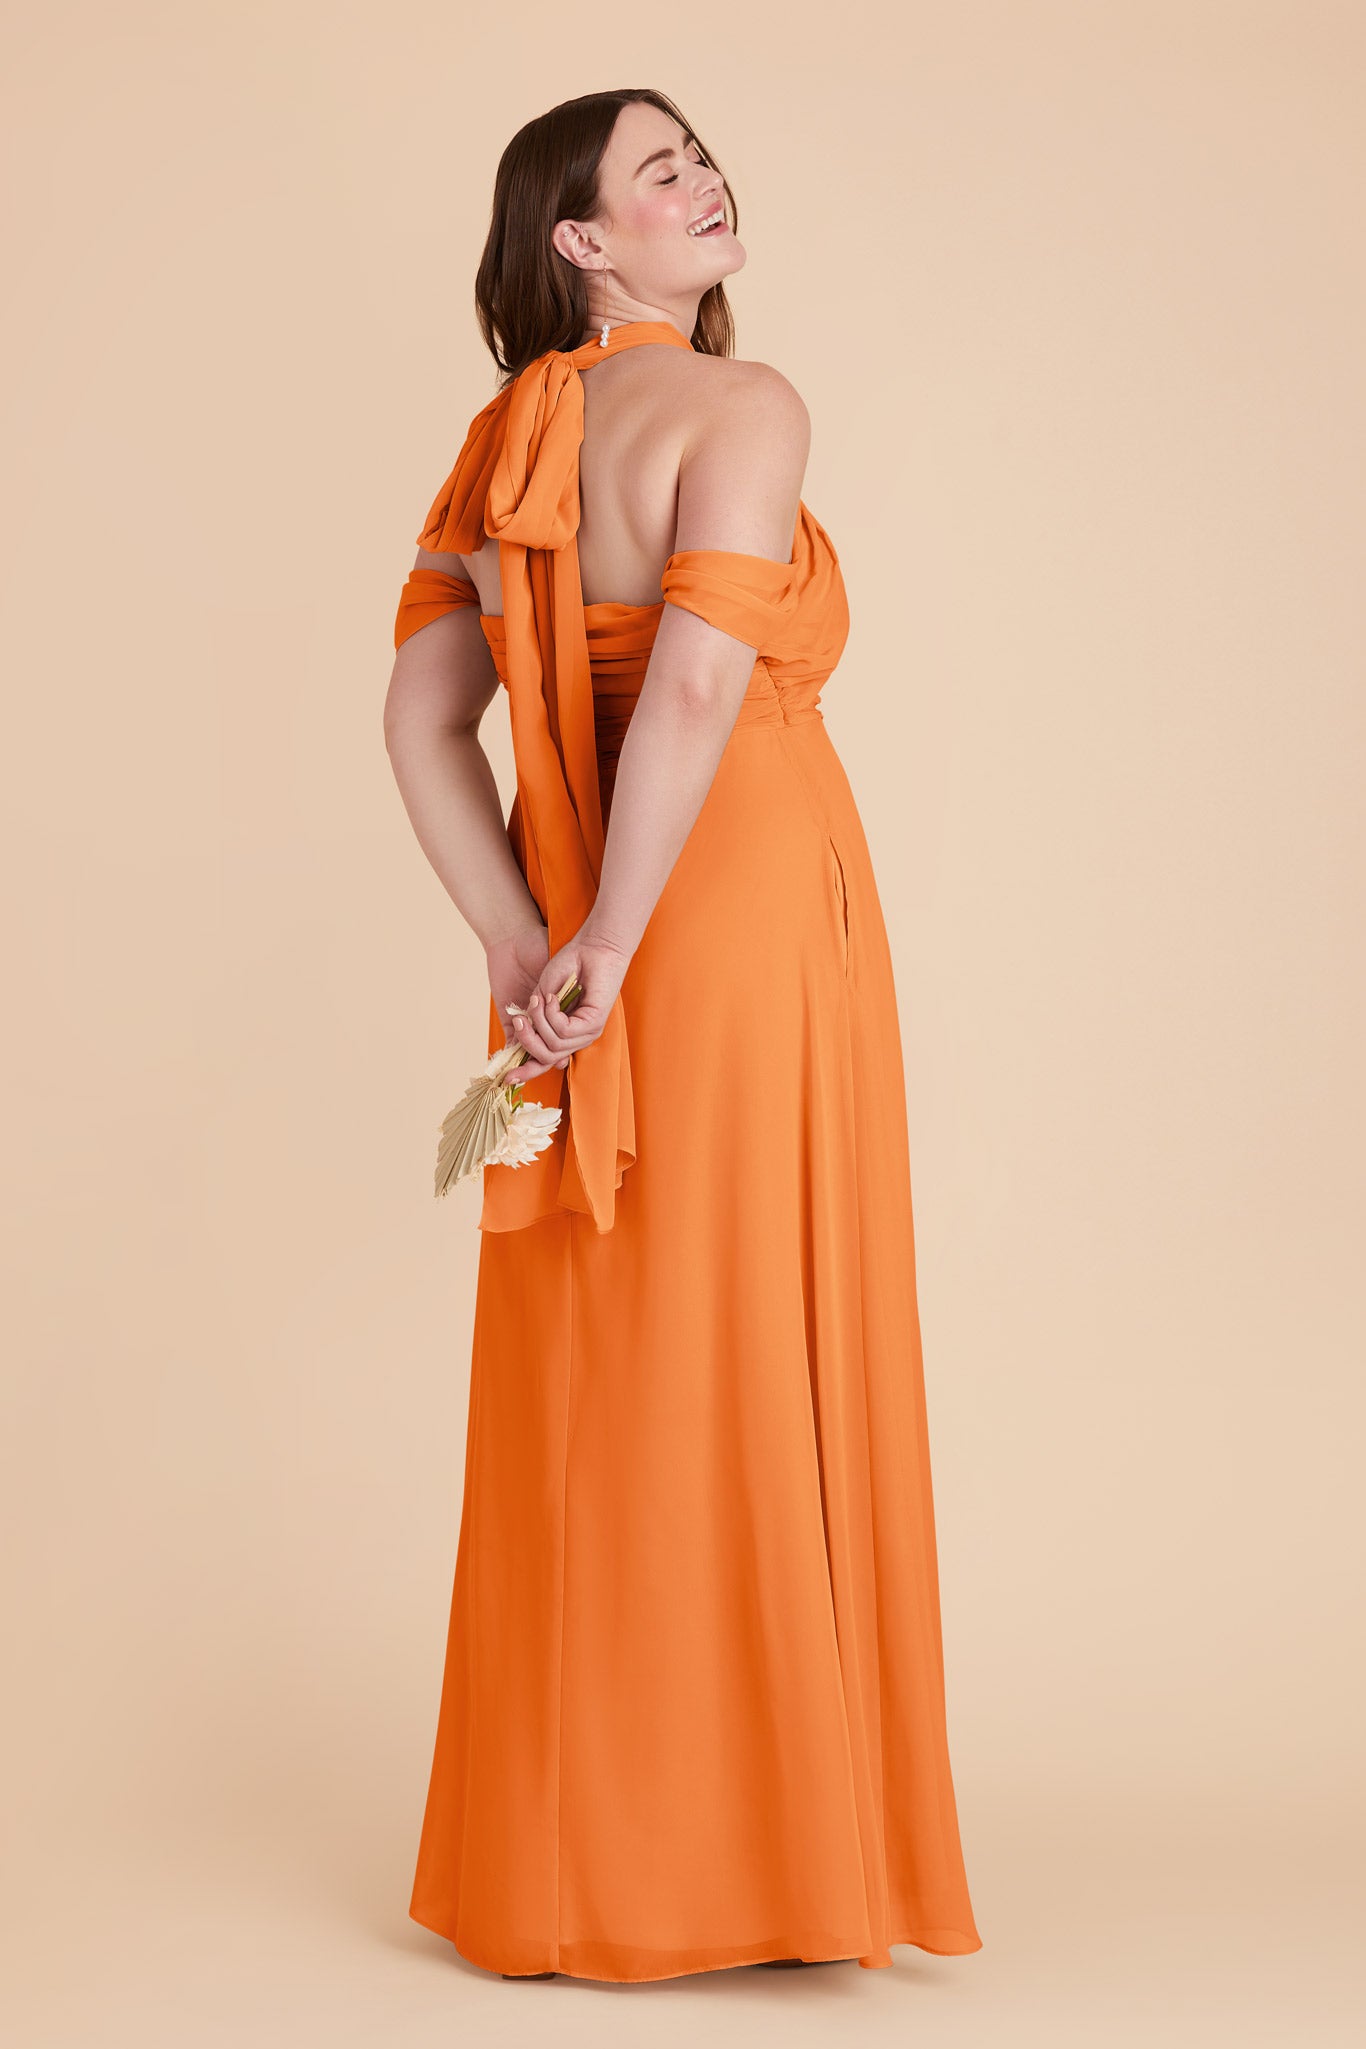 Apricot Cara Chiffon Dress by Birdy Grey